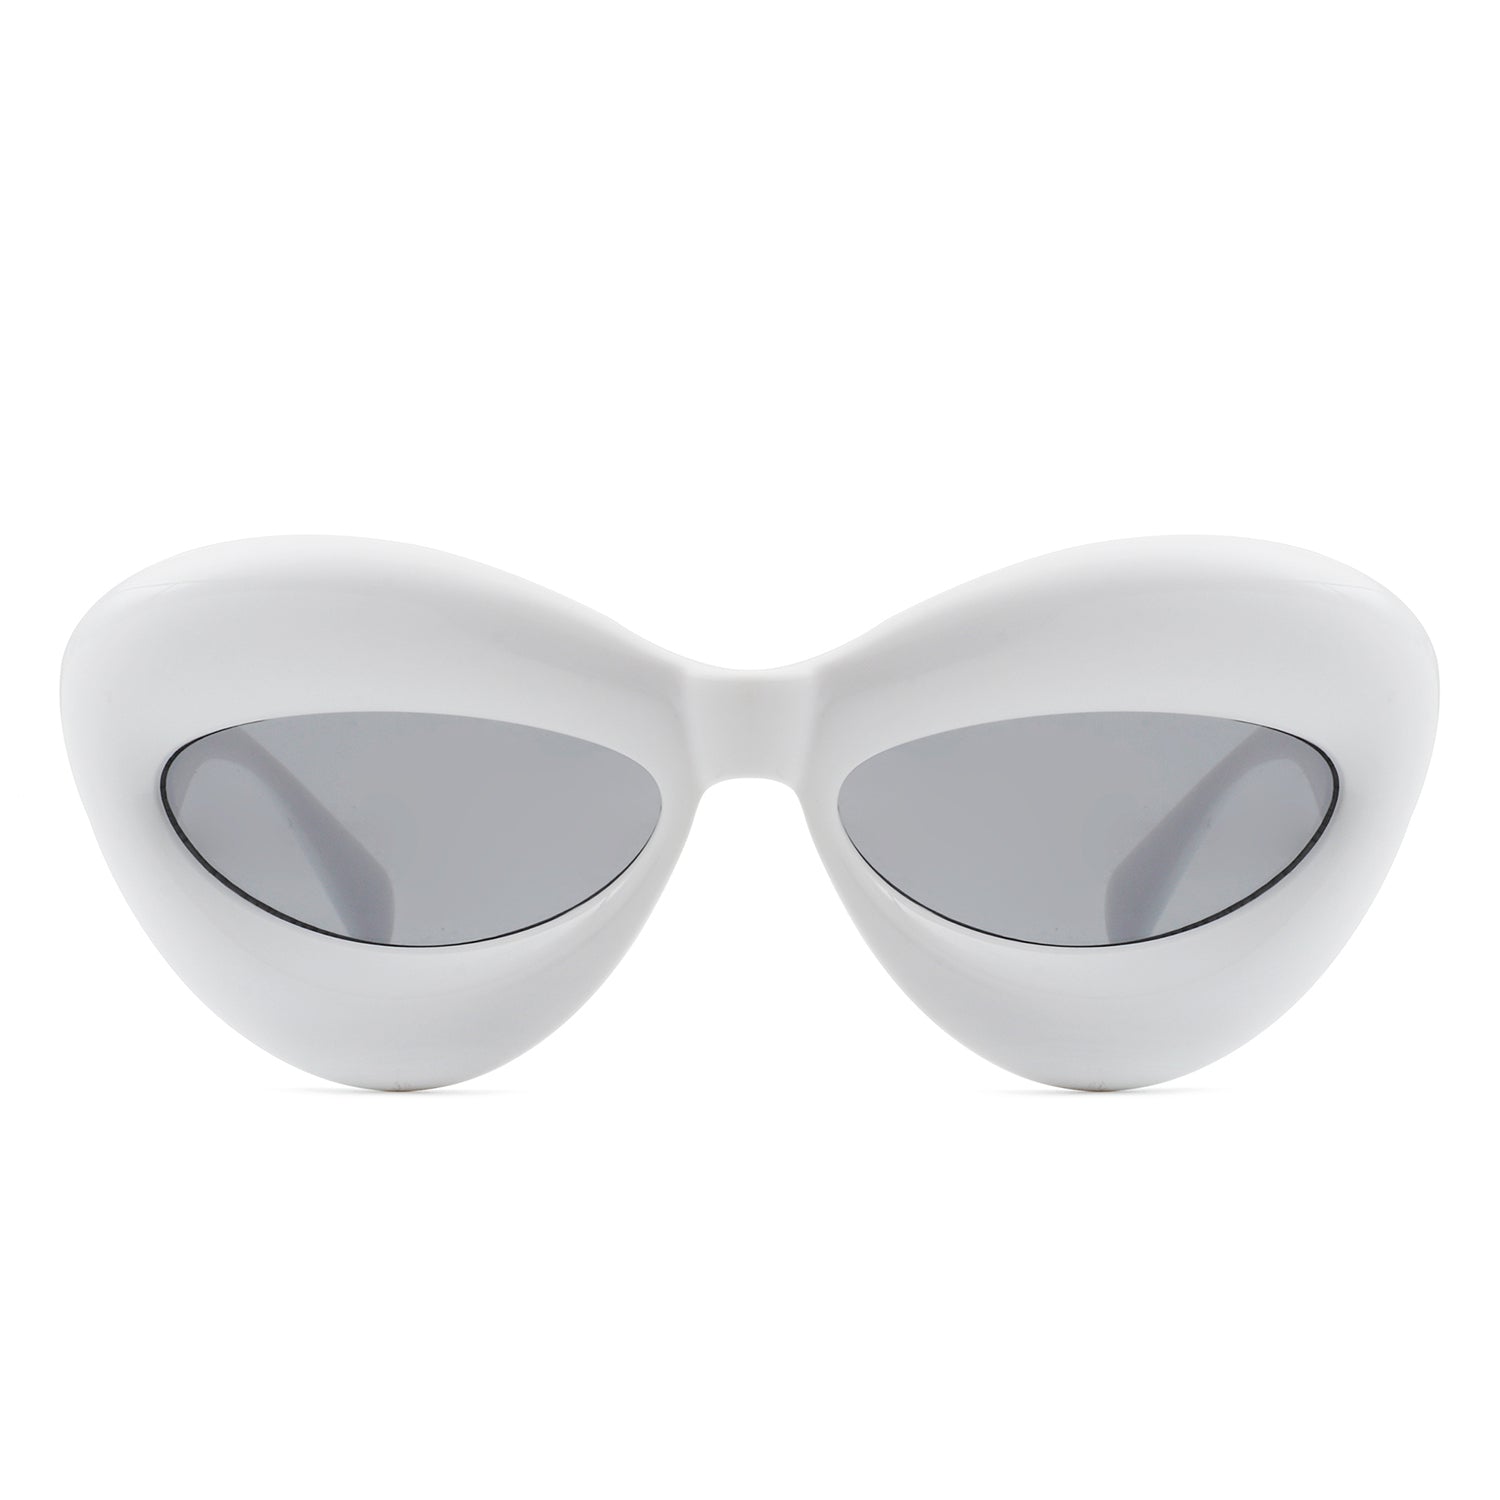 S1208-1 - Oversize Irregular Lips Shape Thick Frame Fashion Women Sunglasses